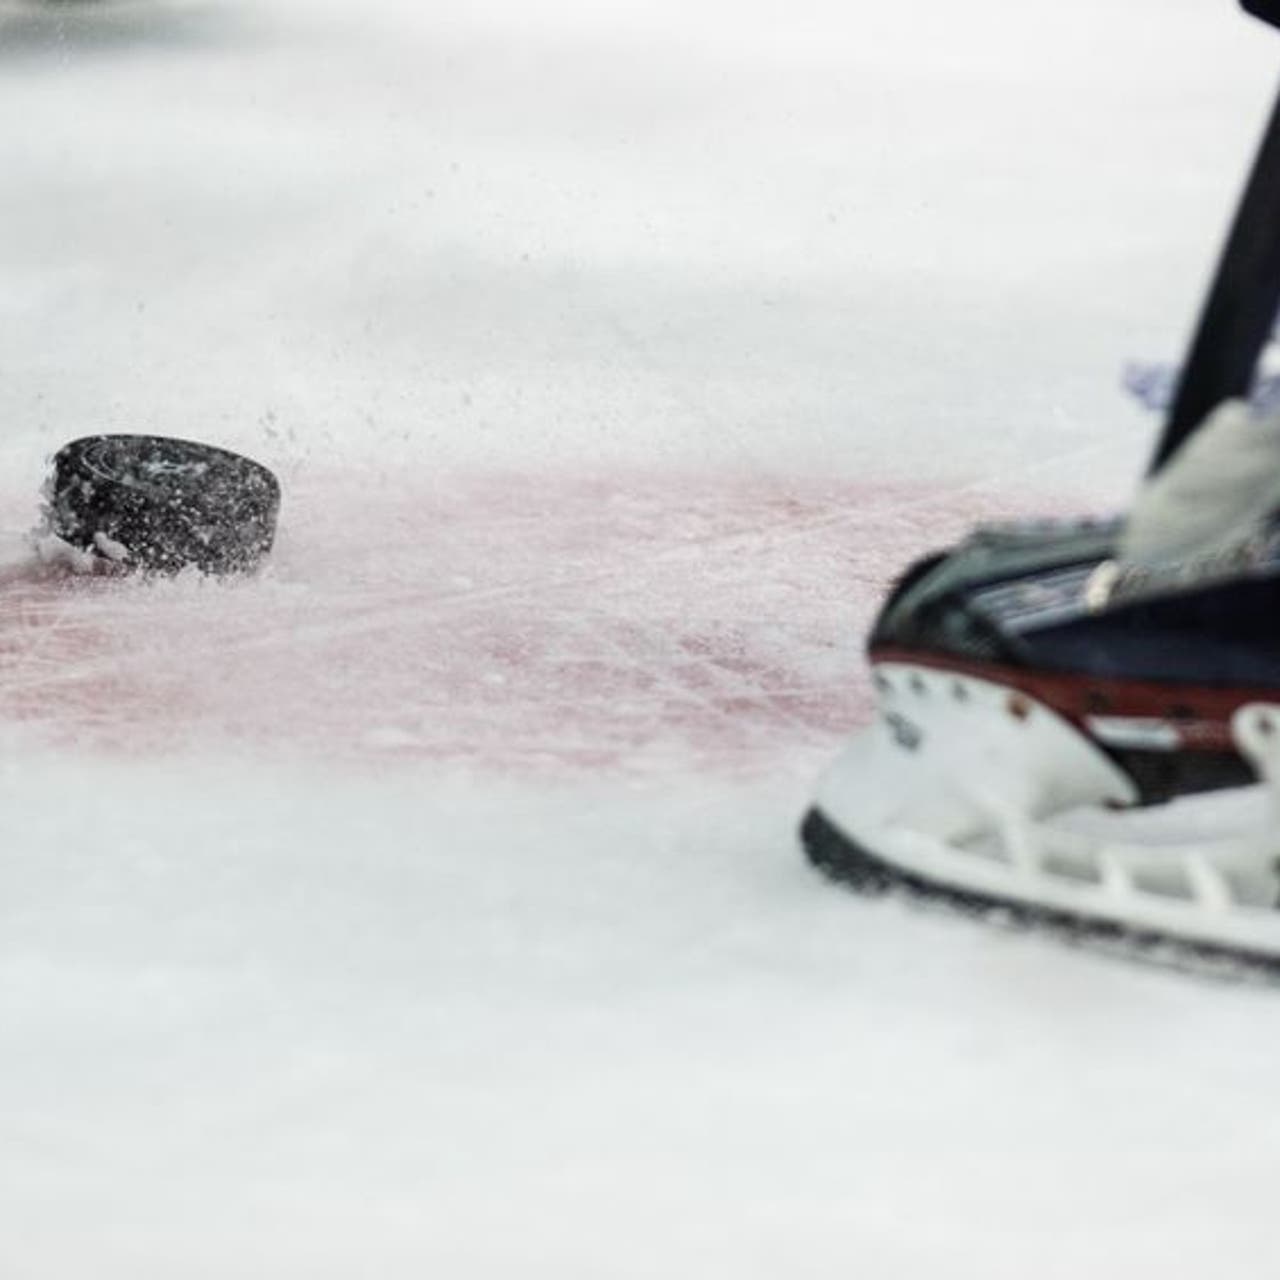 Otters' Alex DeBrincat named CHL Player of the Week - Canadian Hockey League